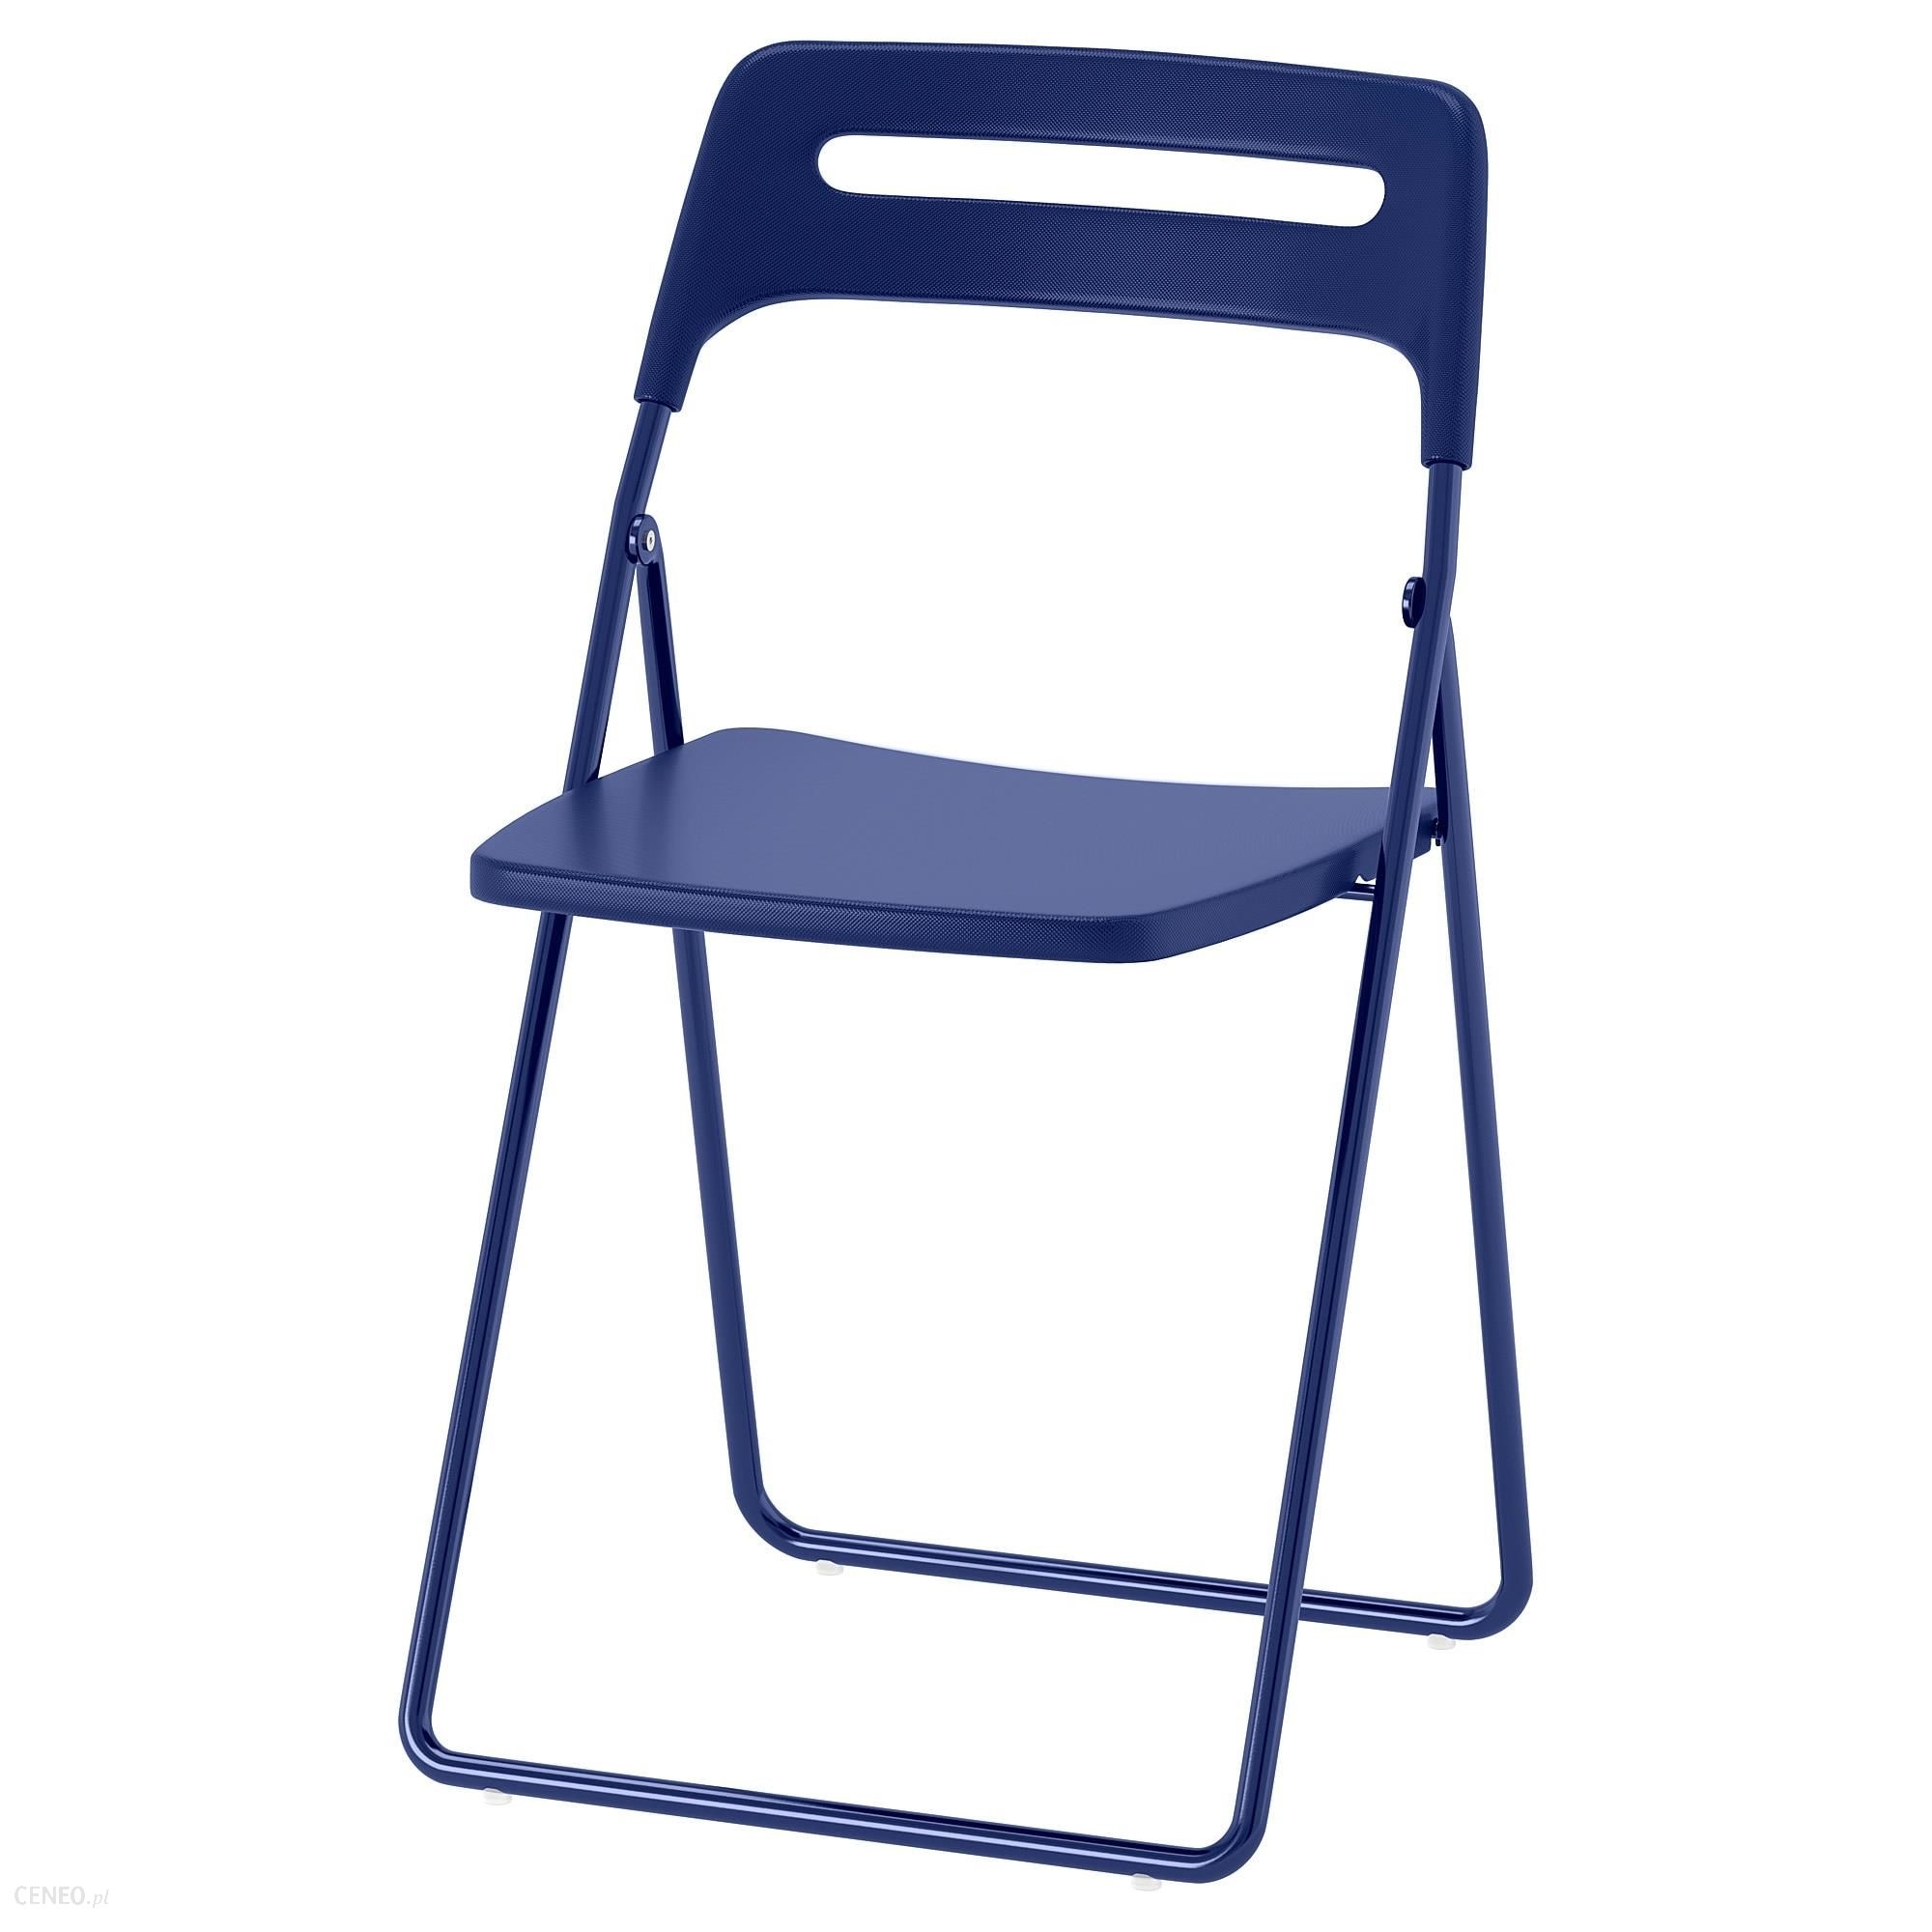 Folding Chairs - Walmart.com